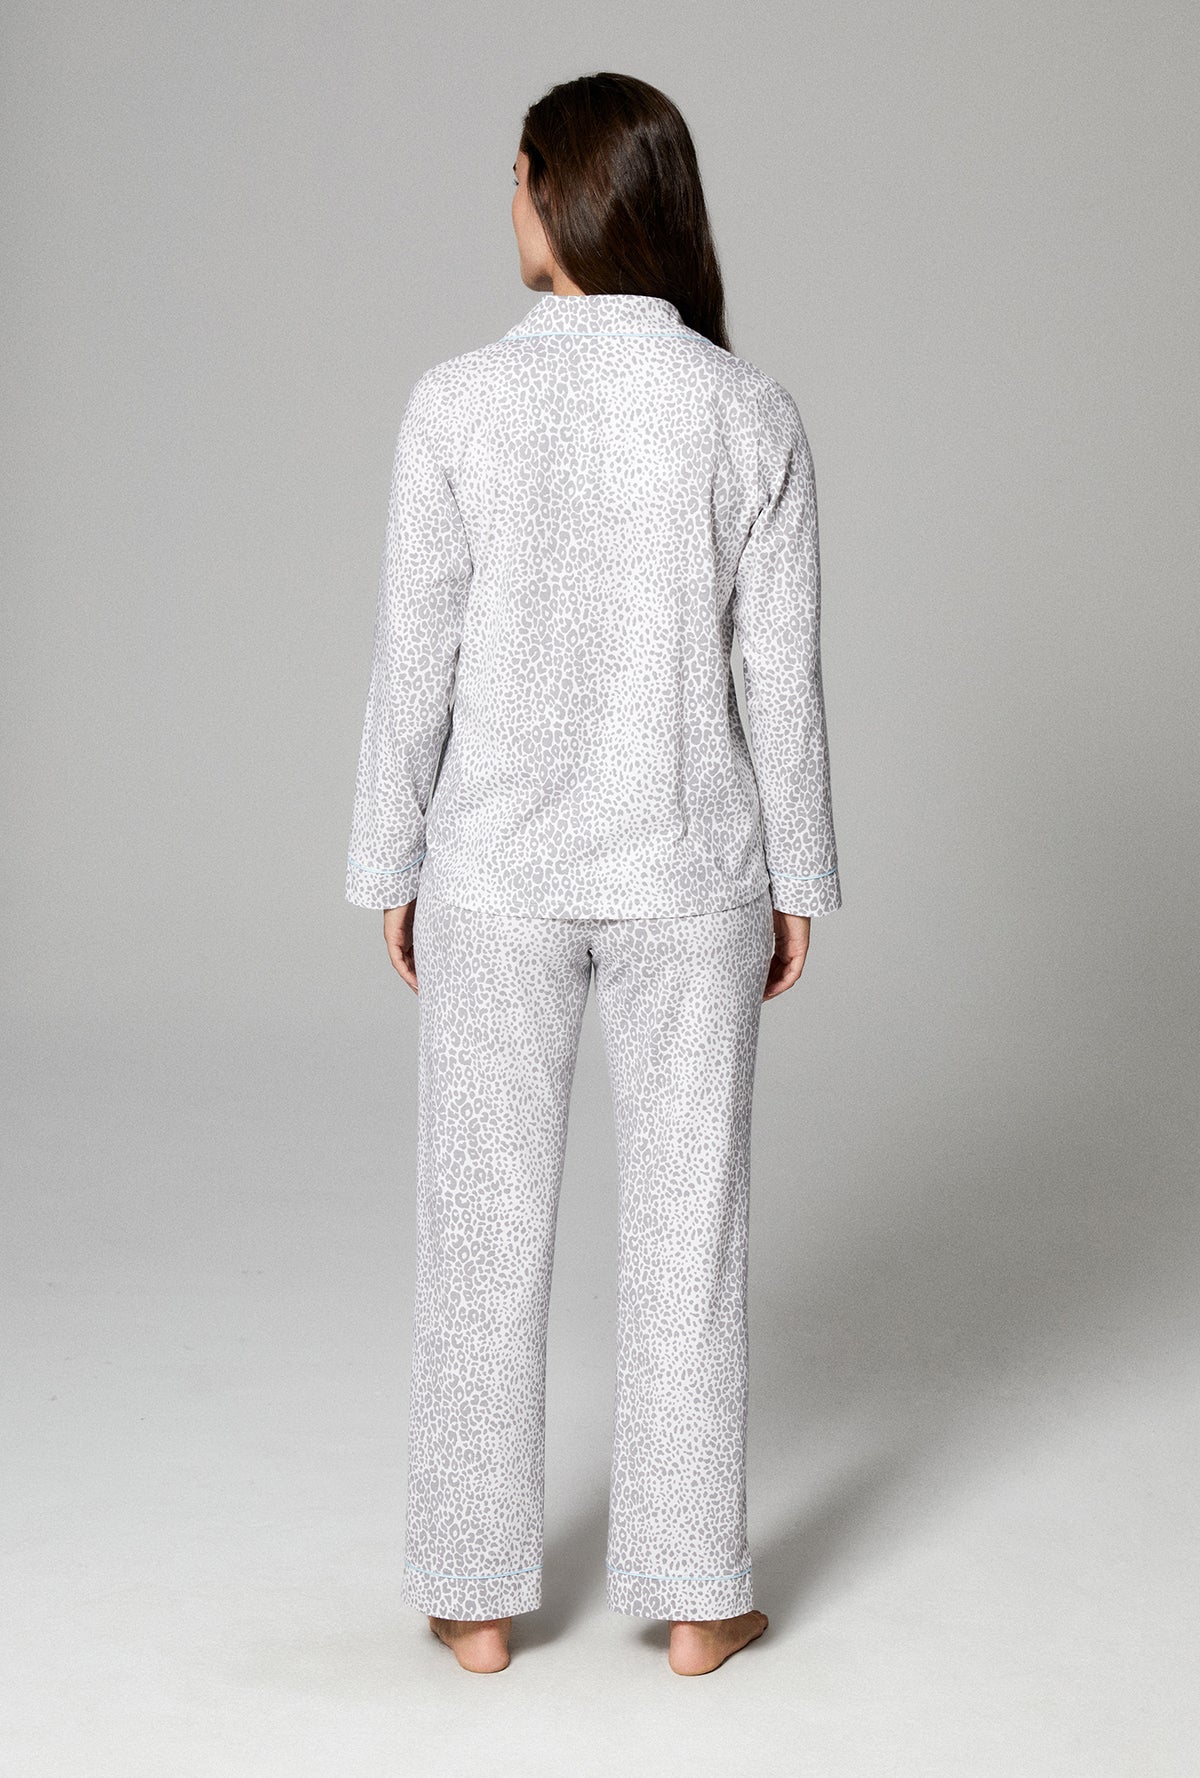 Snowcat Long Sleeve Classic Stretch - Bedhead PJ Jersey Set Pajamas